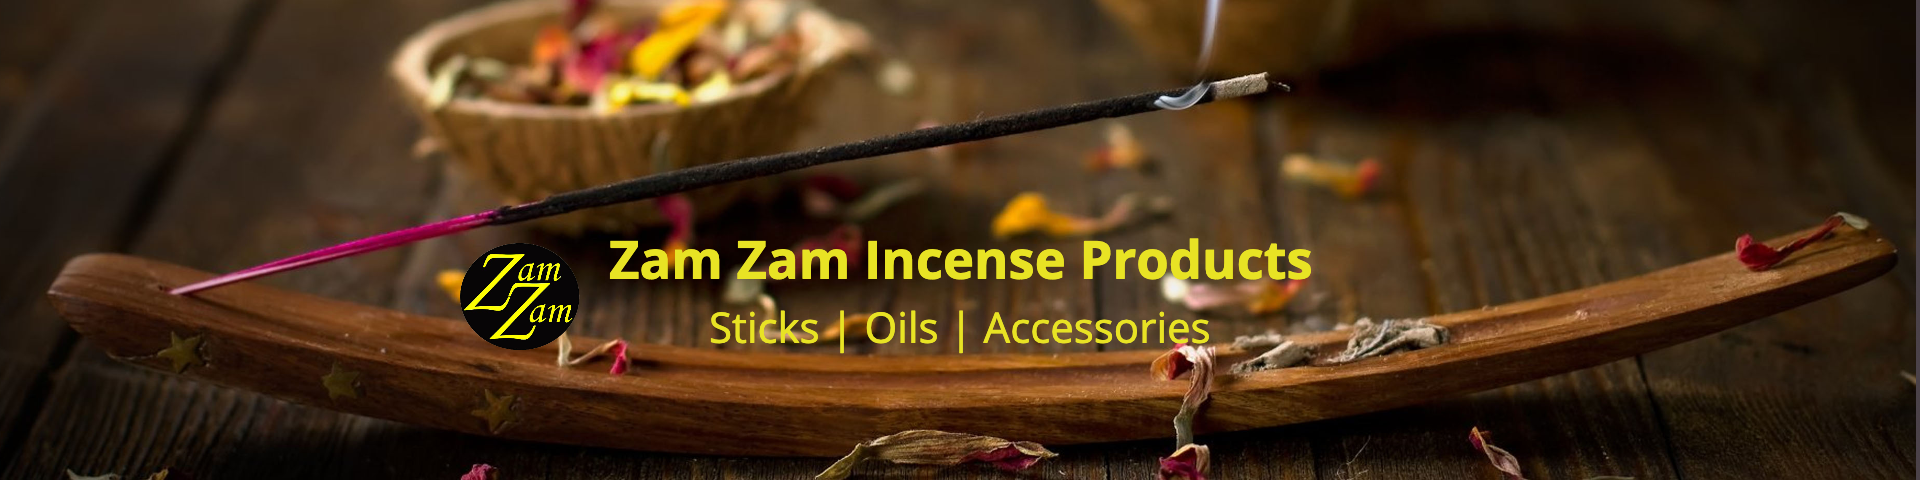 Zam Zam Incense Products